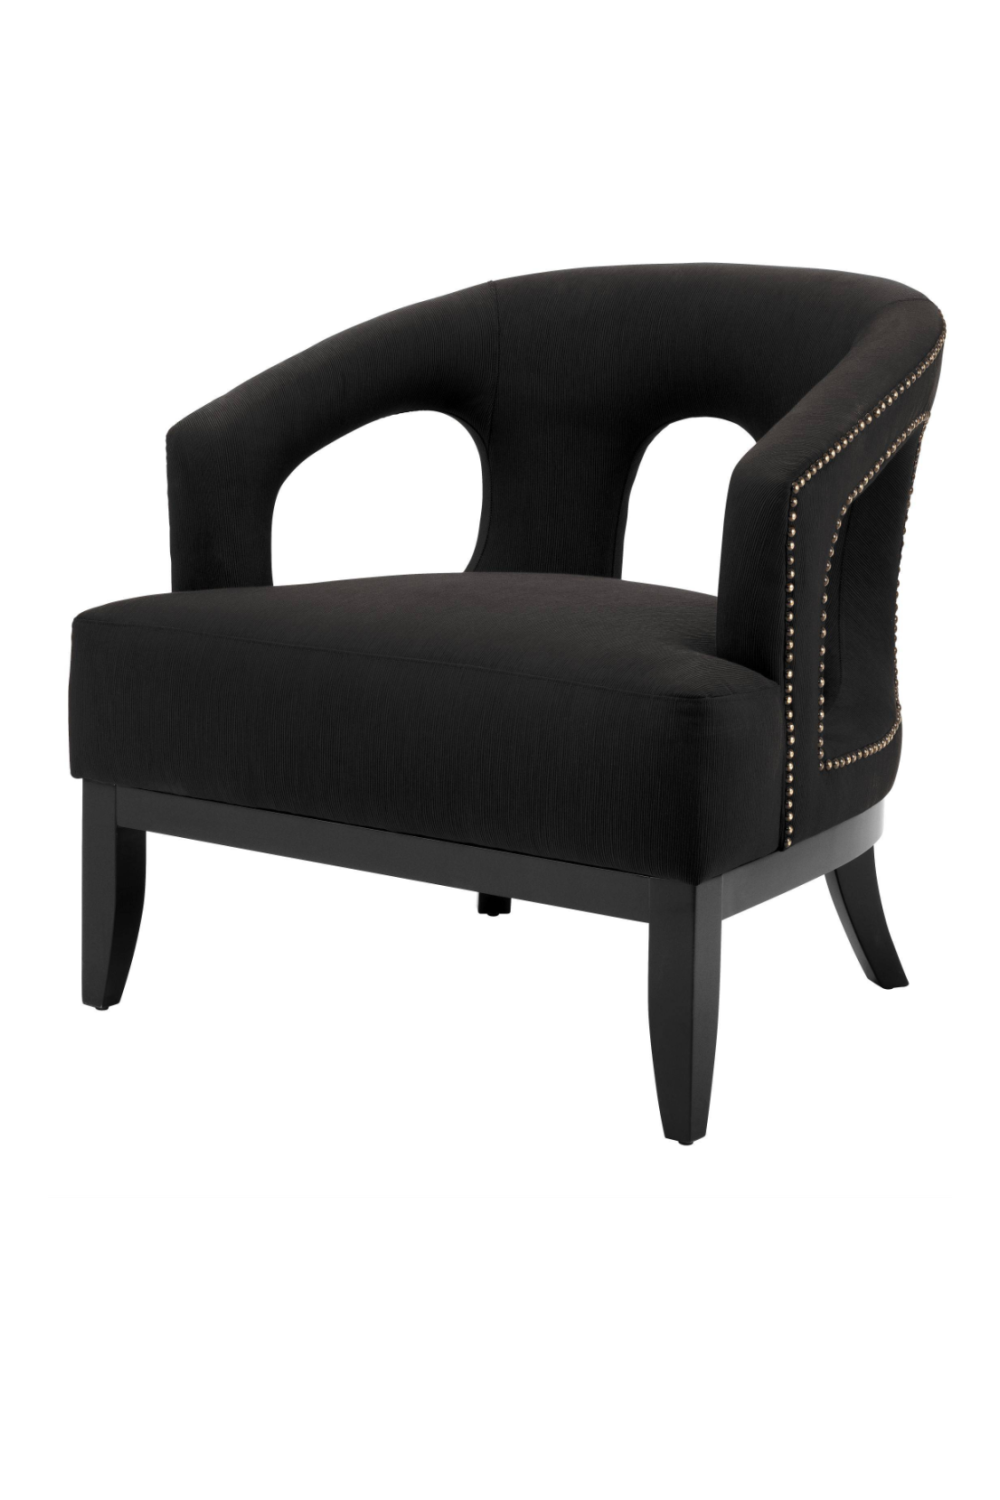 Studded Black Accent Chair | Eichholtz Adam | Oroa.com